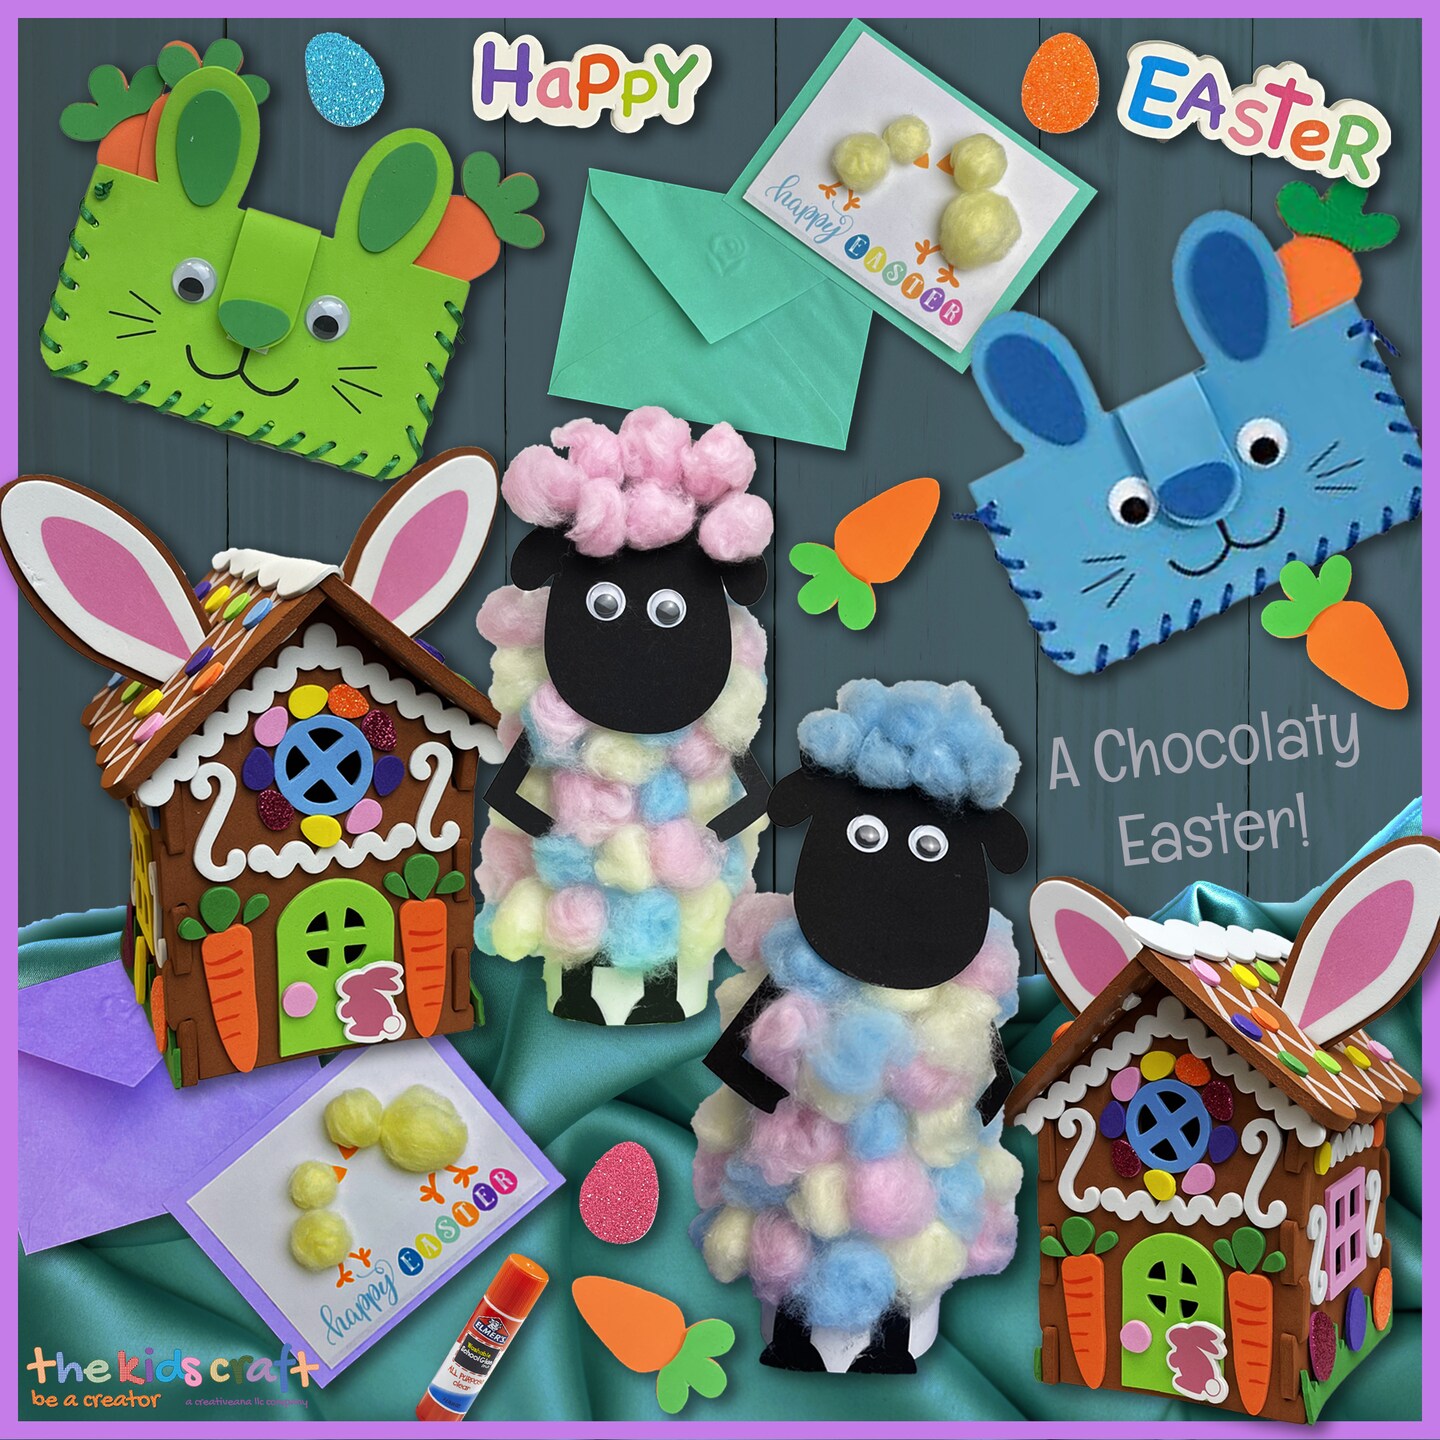 The Kids Craft, A Chocolaty Easter DIY Crafts Box